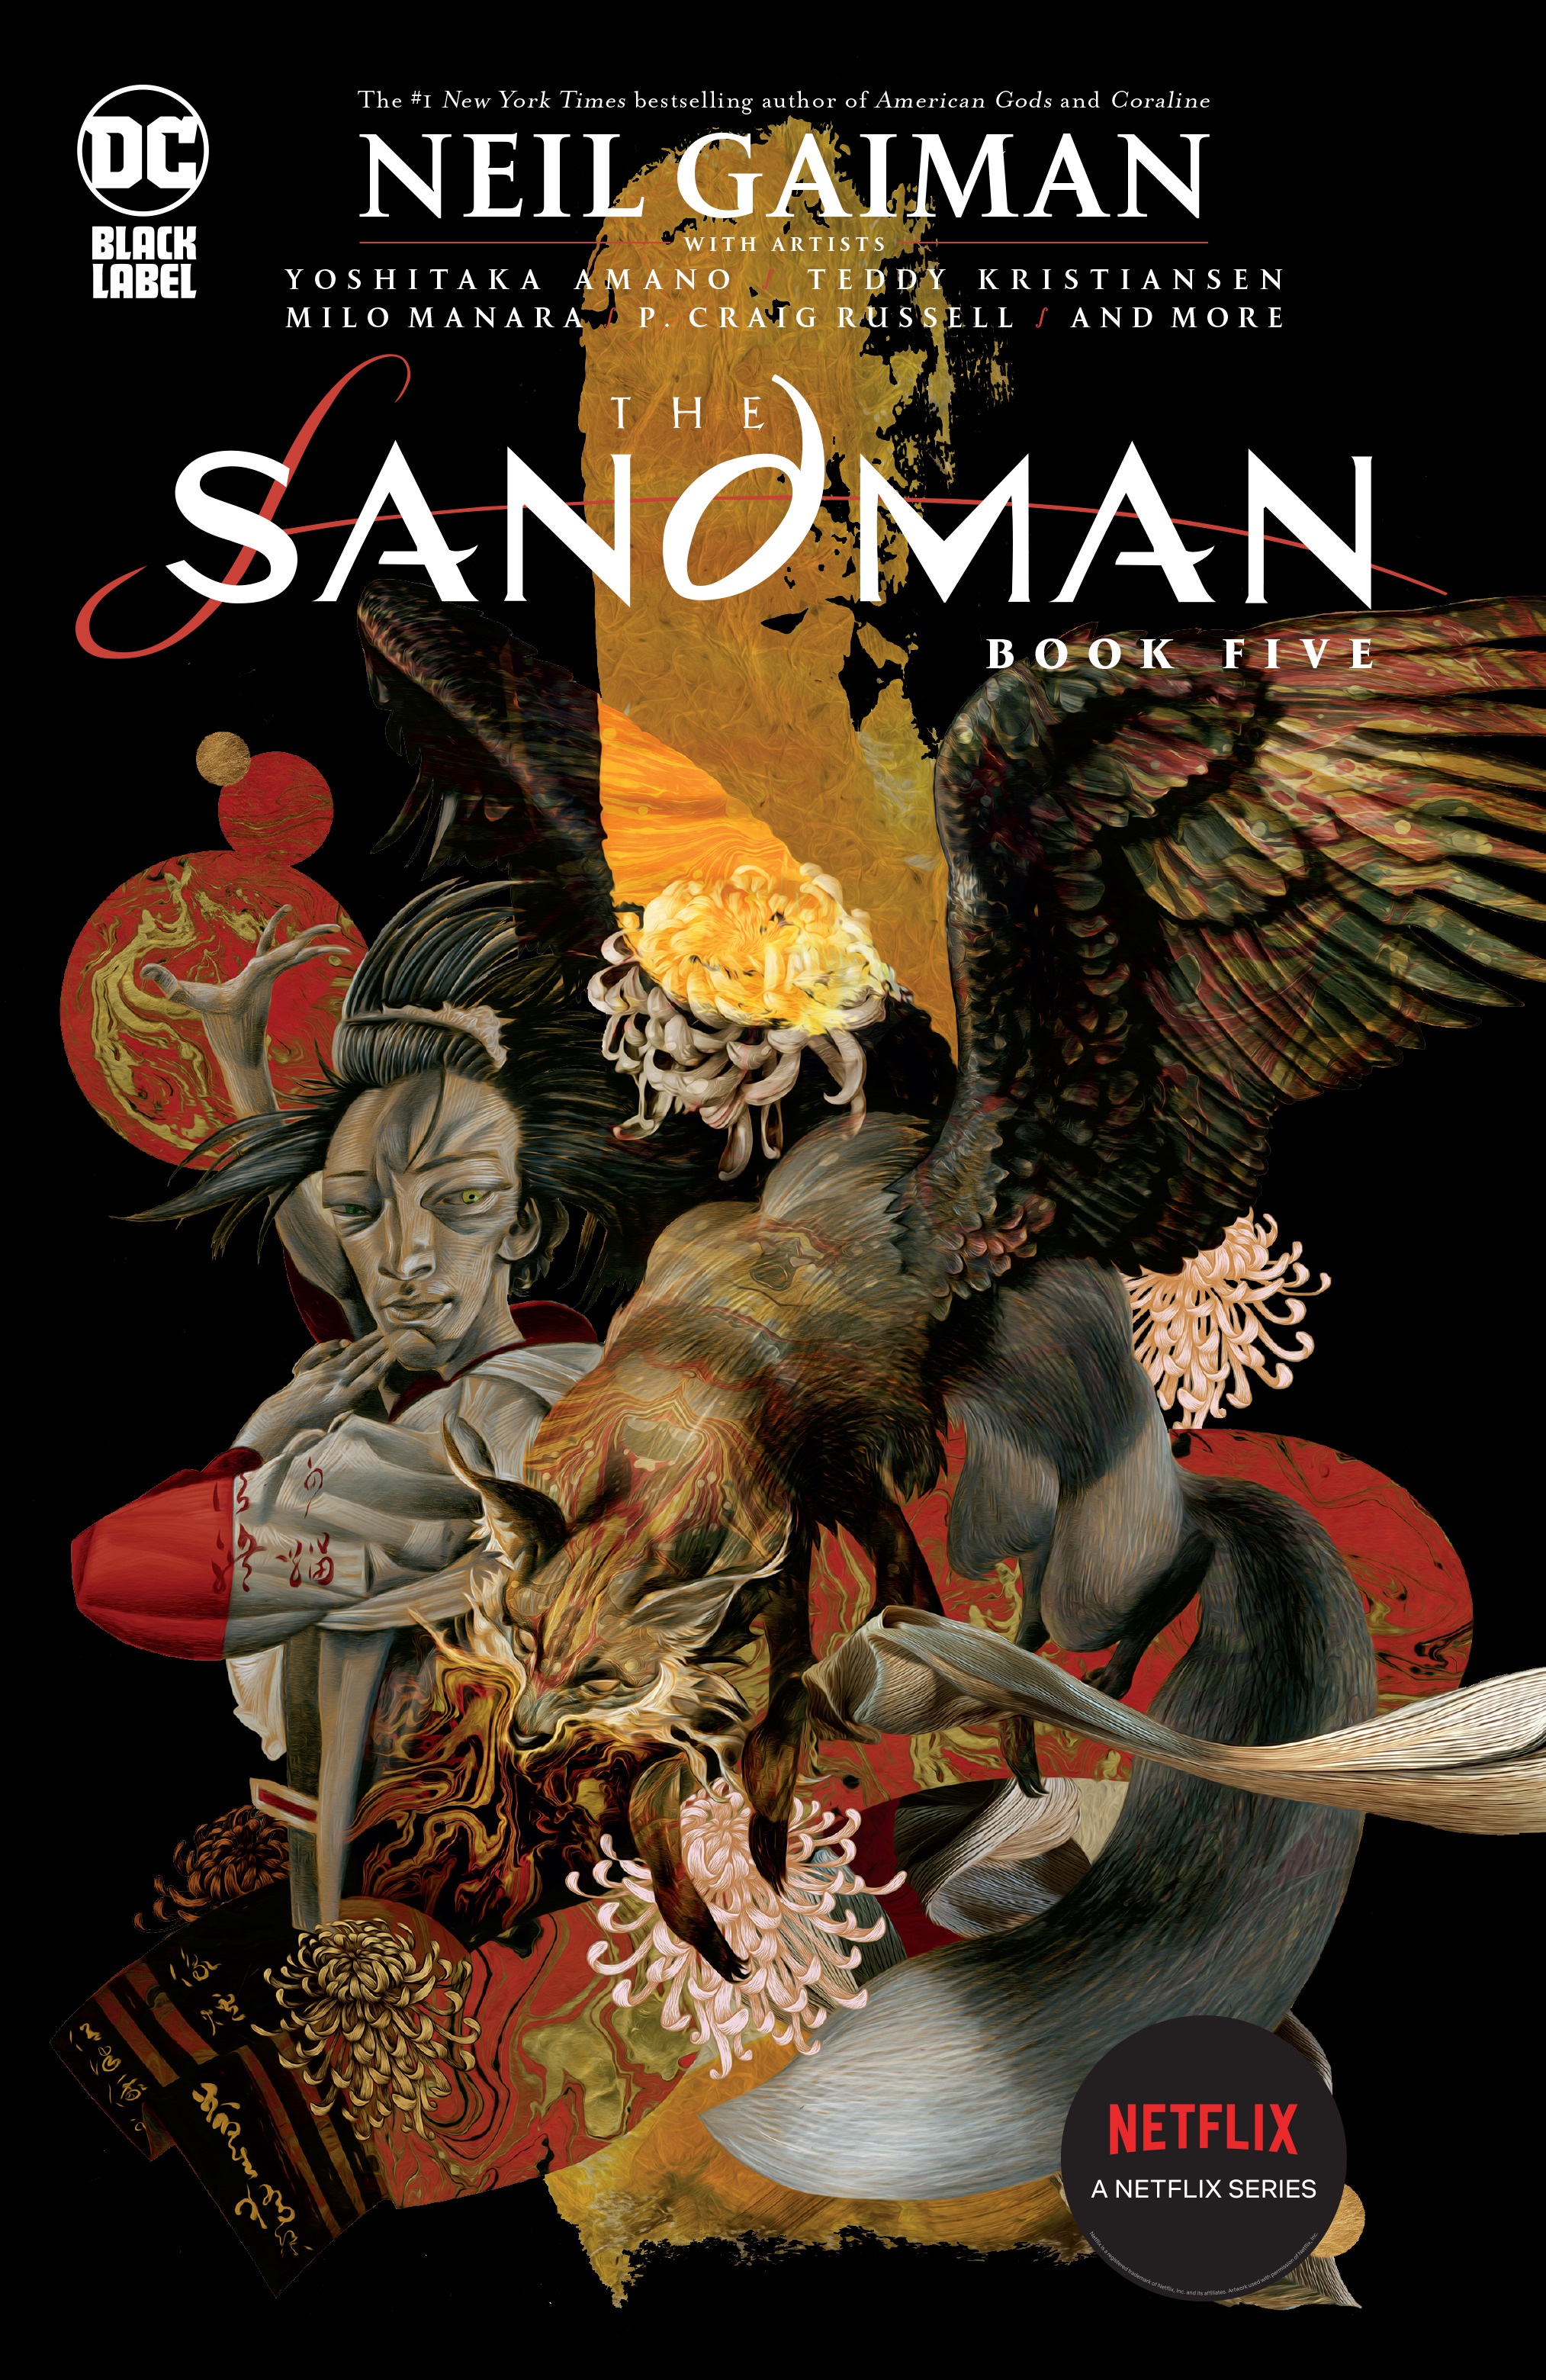 The Sandman Book Five s/c